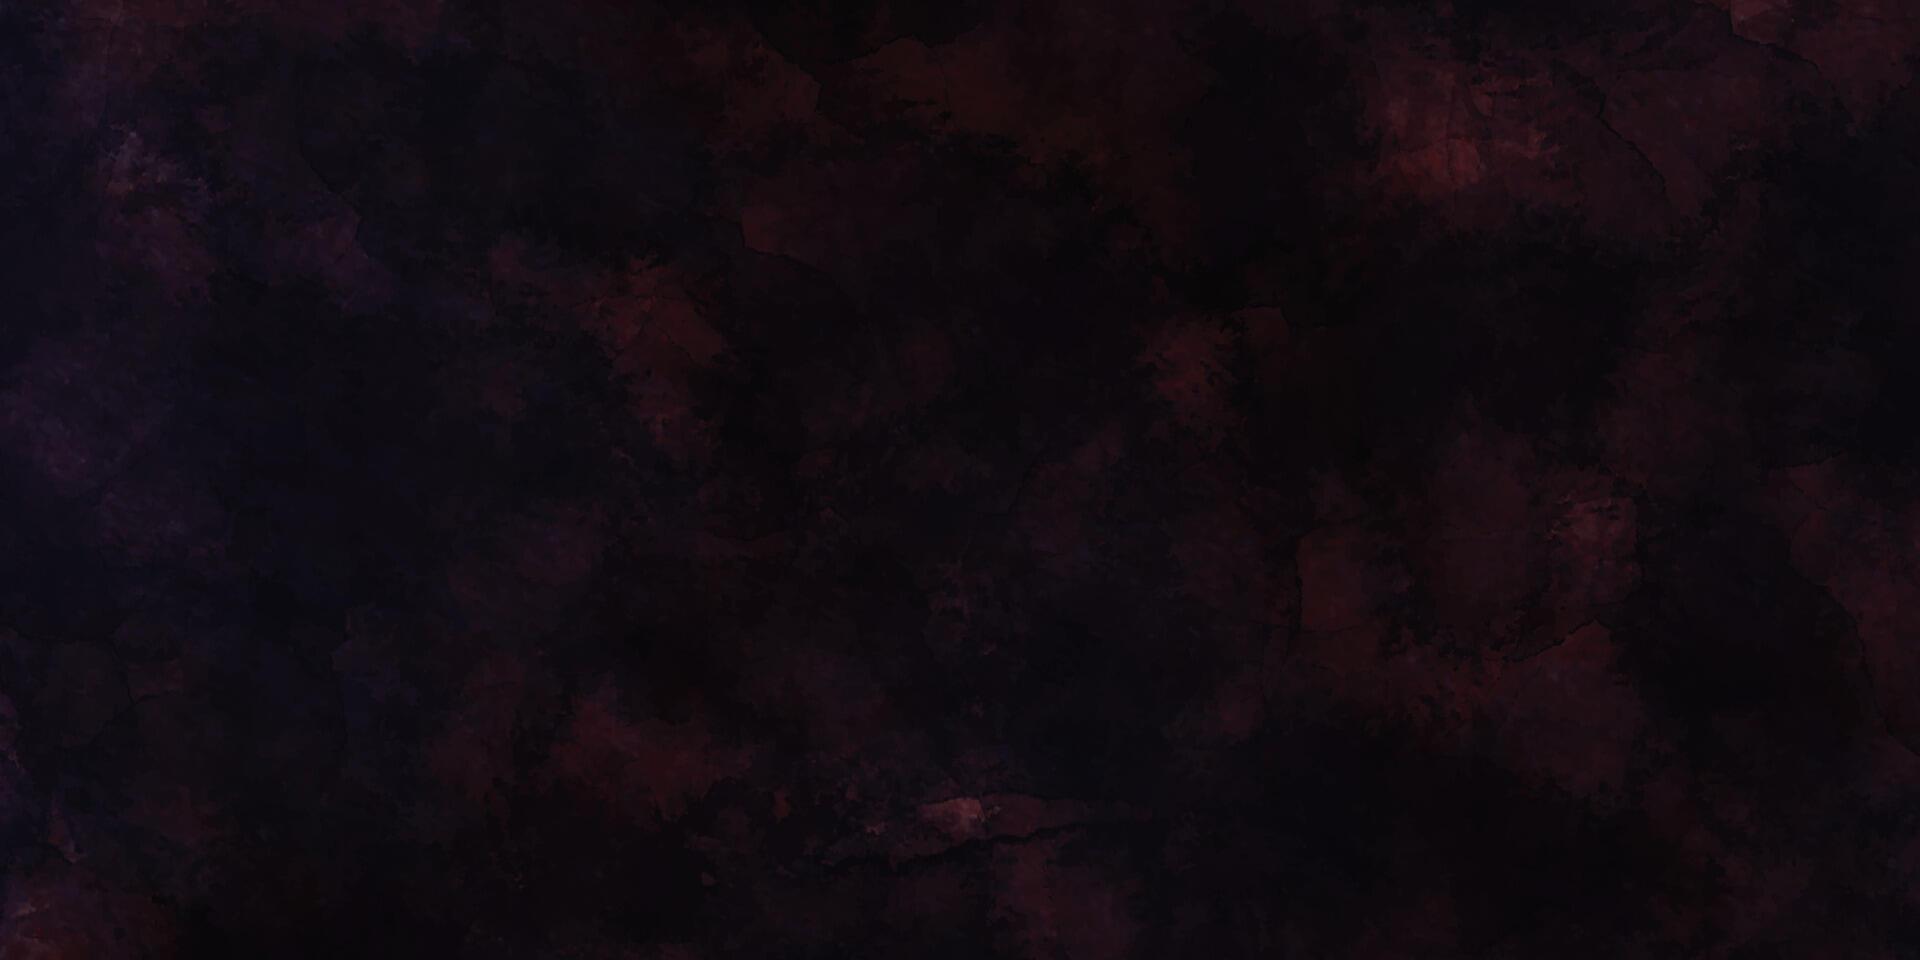 donker grunge structuur achtergrond. donker explosie achtergrond. abstract waterverf achtergrond textuur. zwart en rood vuil wijnoogst achtergrond. rood grunge gekrast textuur. structuur van verf. vector